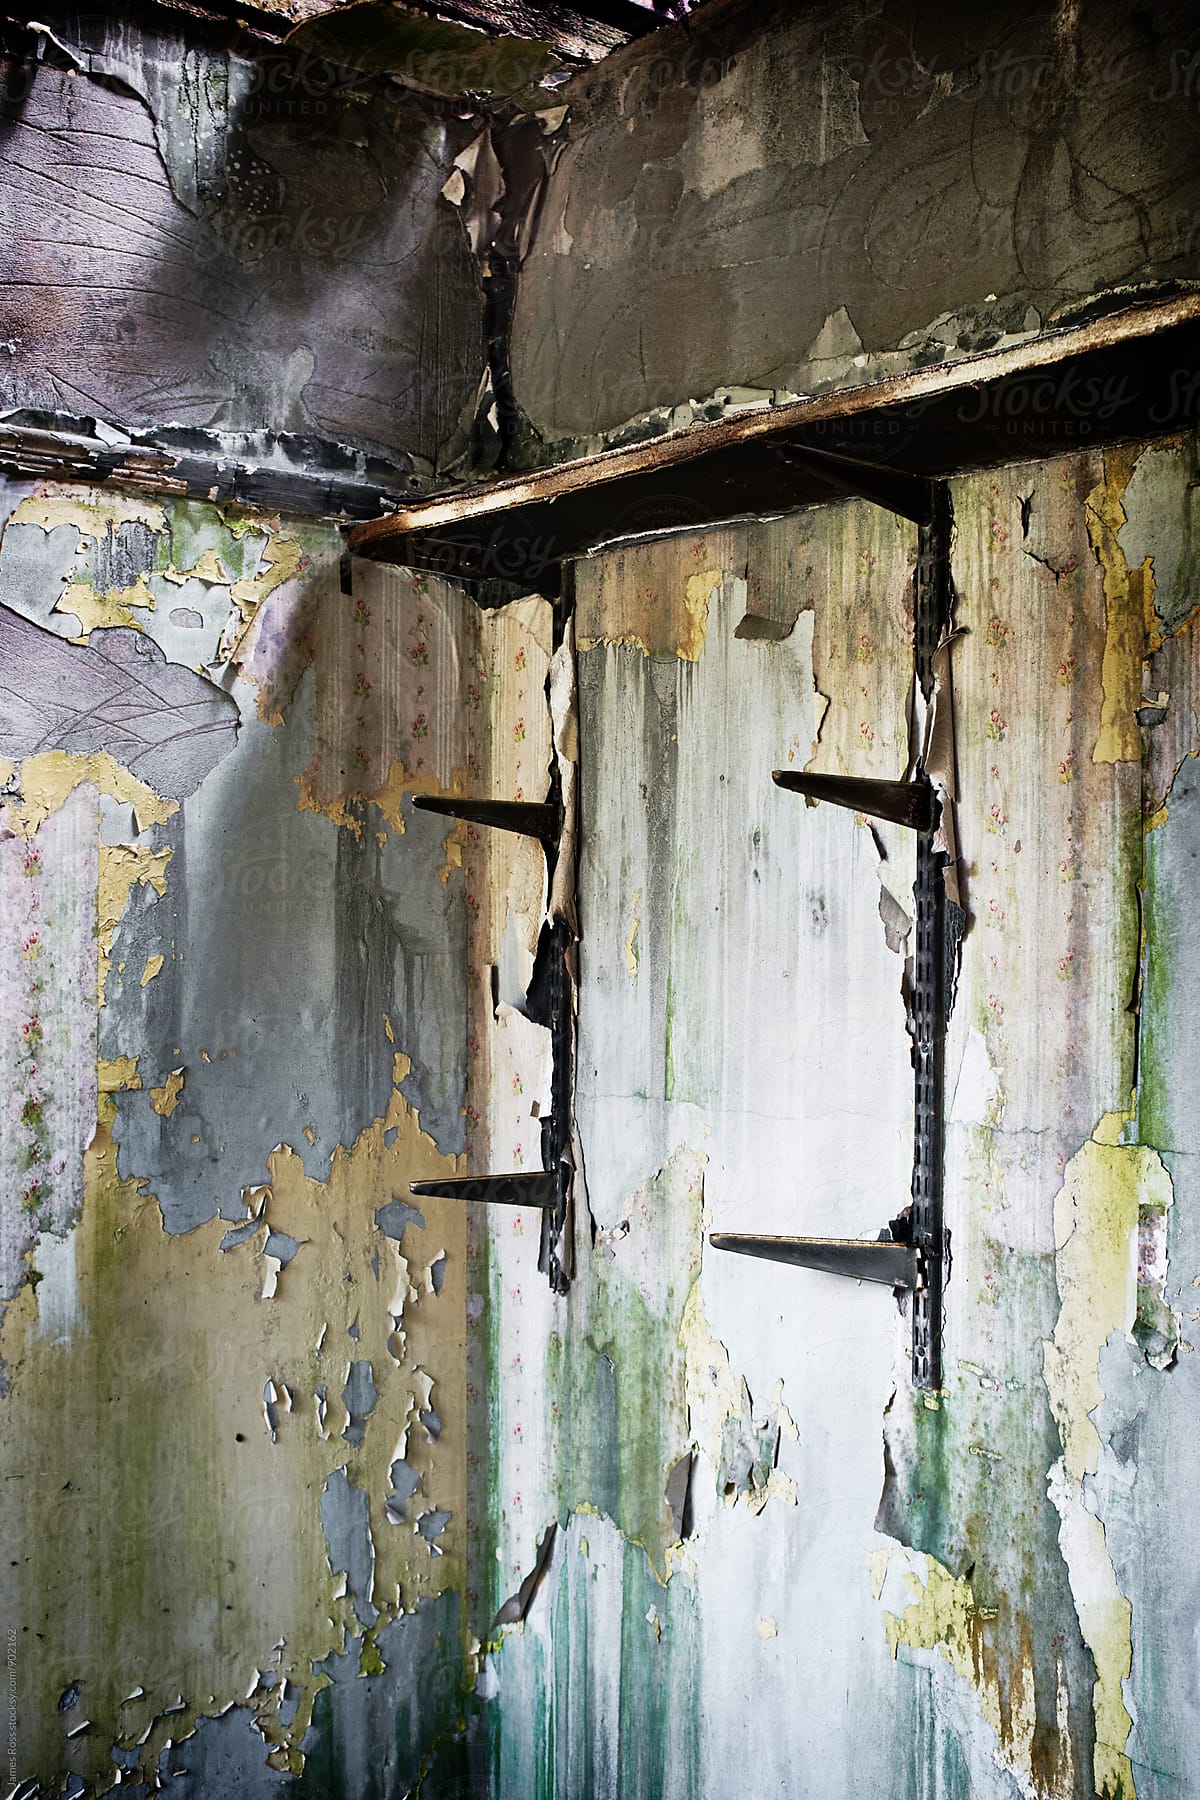 Inside a fire damaged room